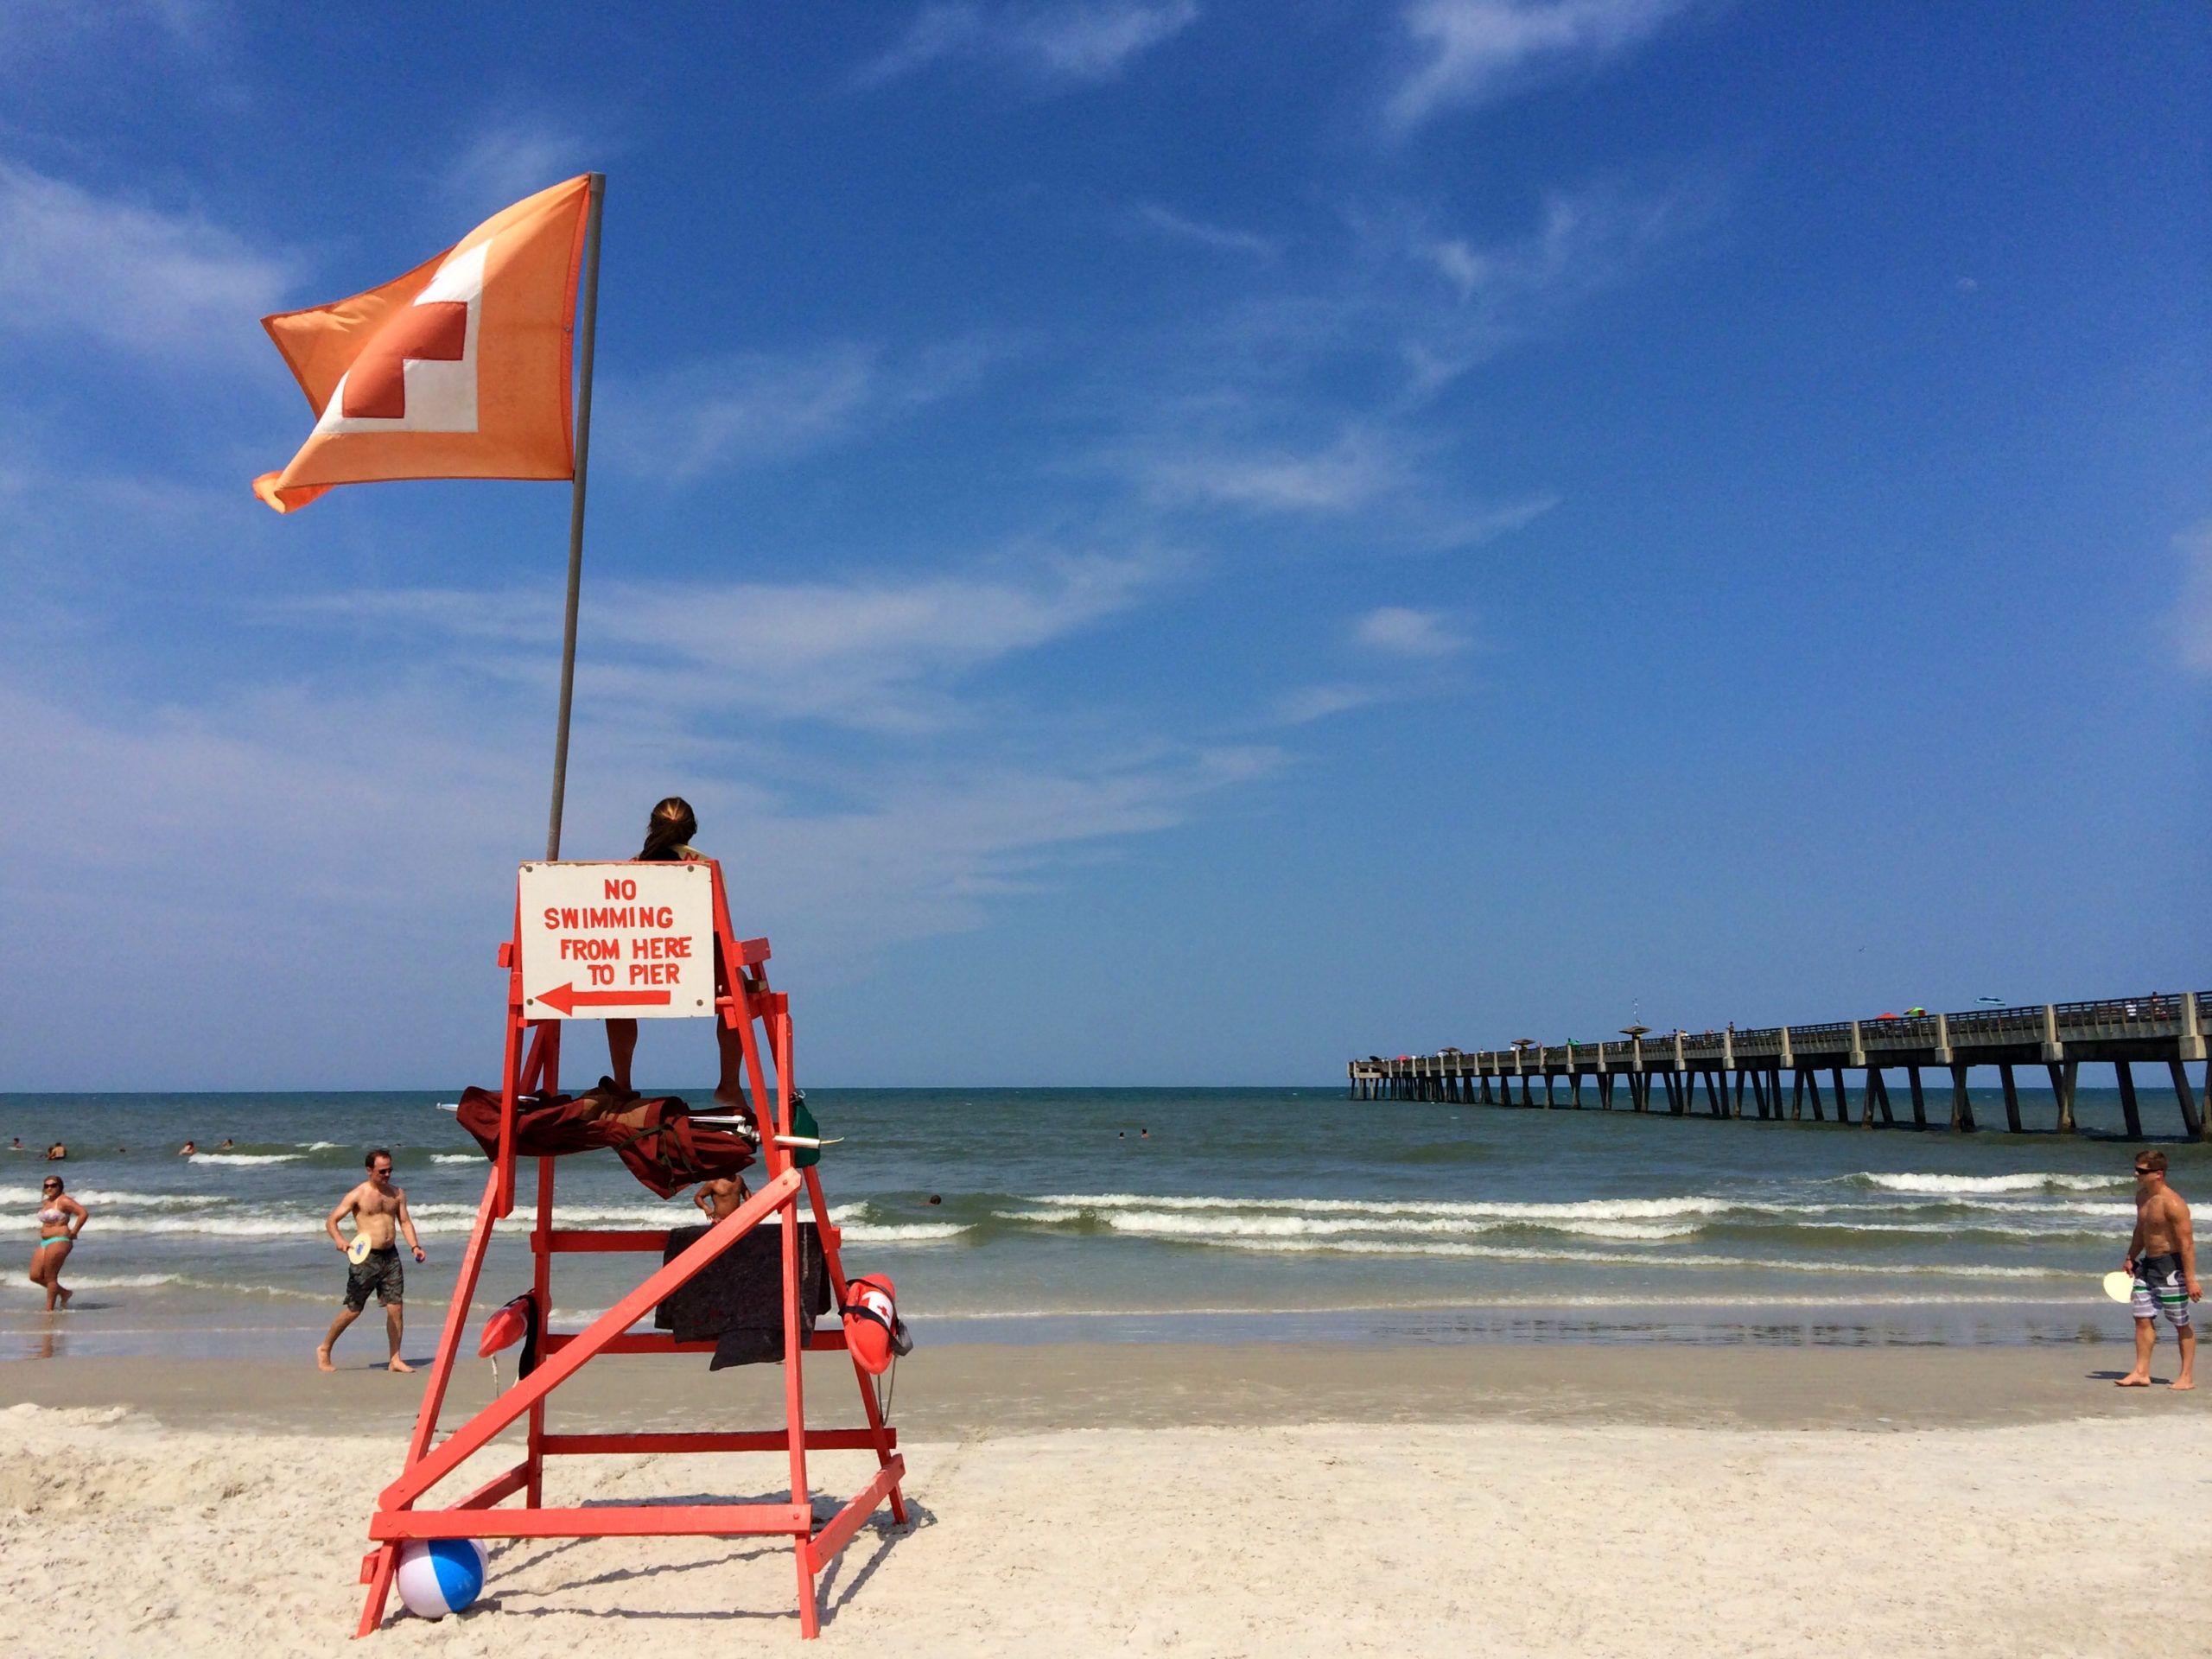 A lifeguard on duty at Jacksonville Beach, Florida.